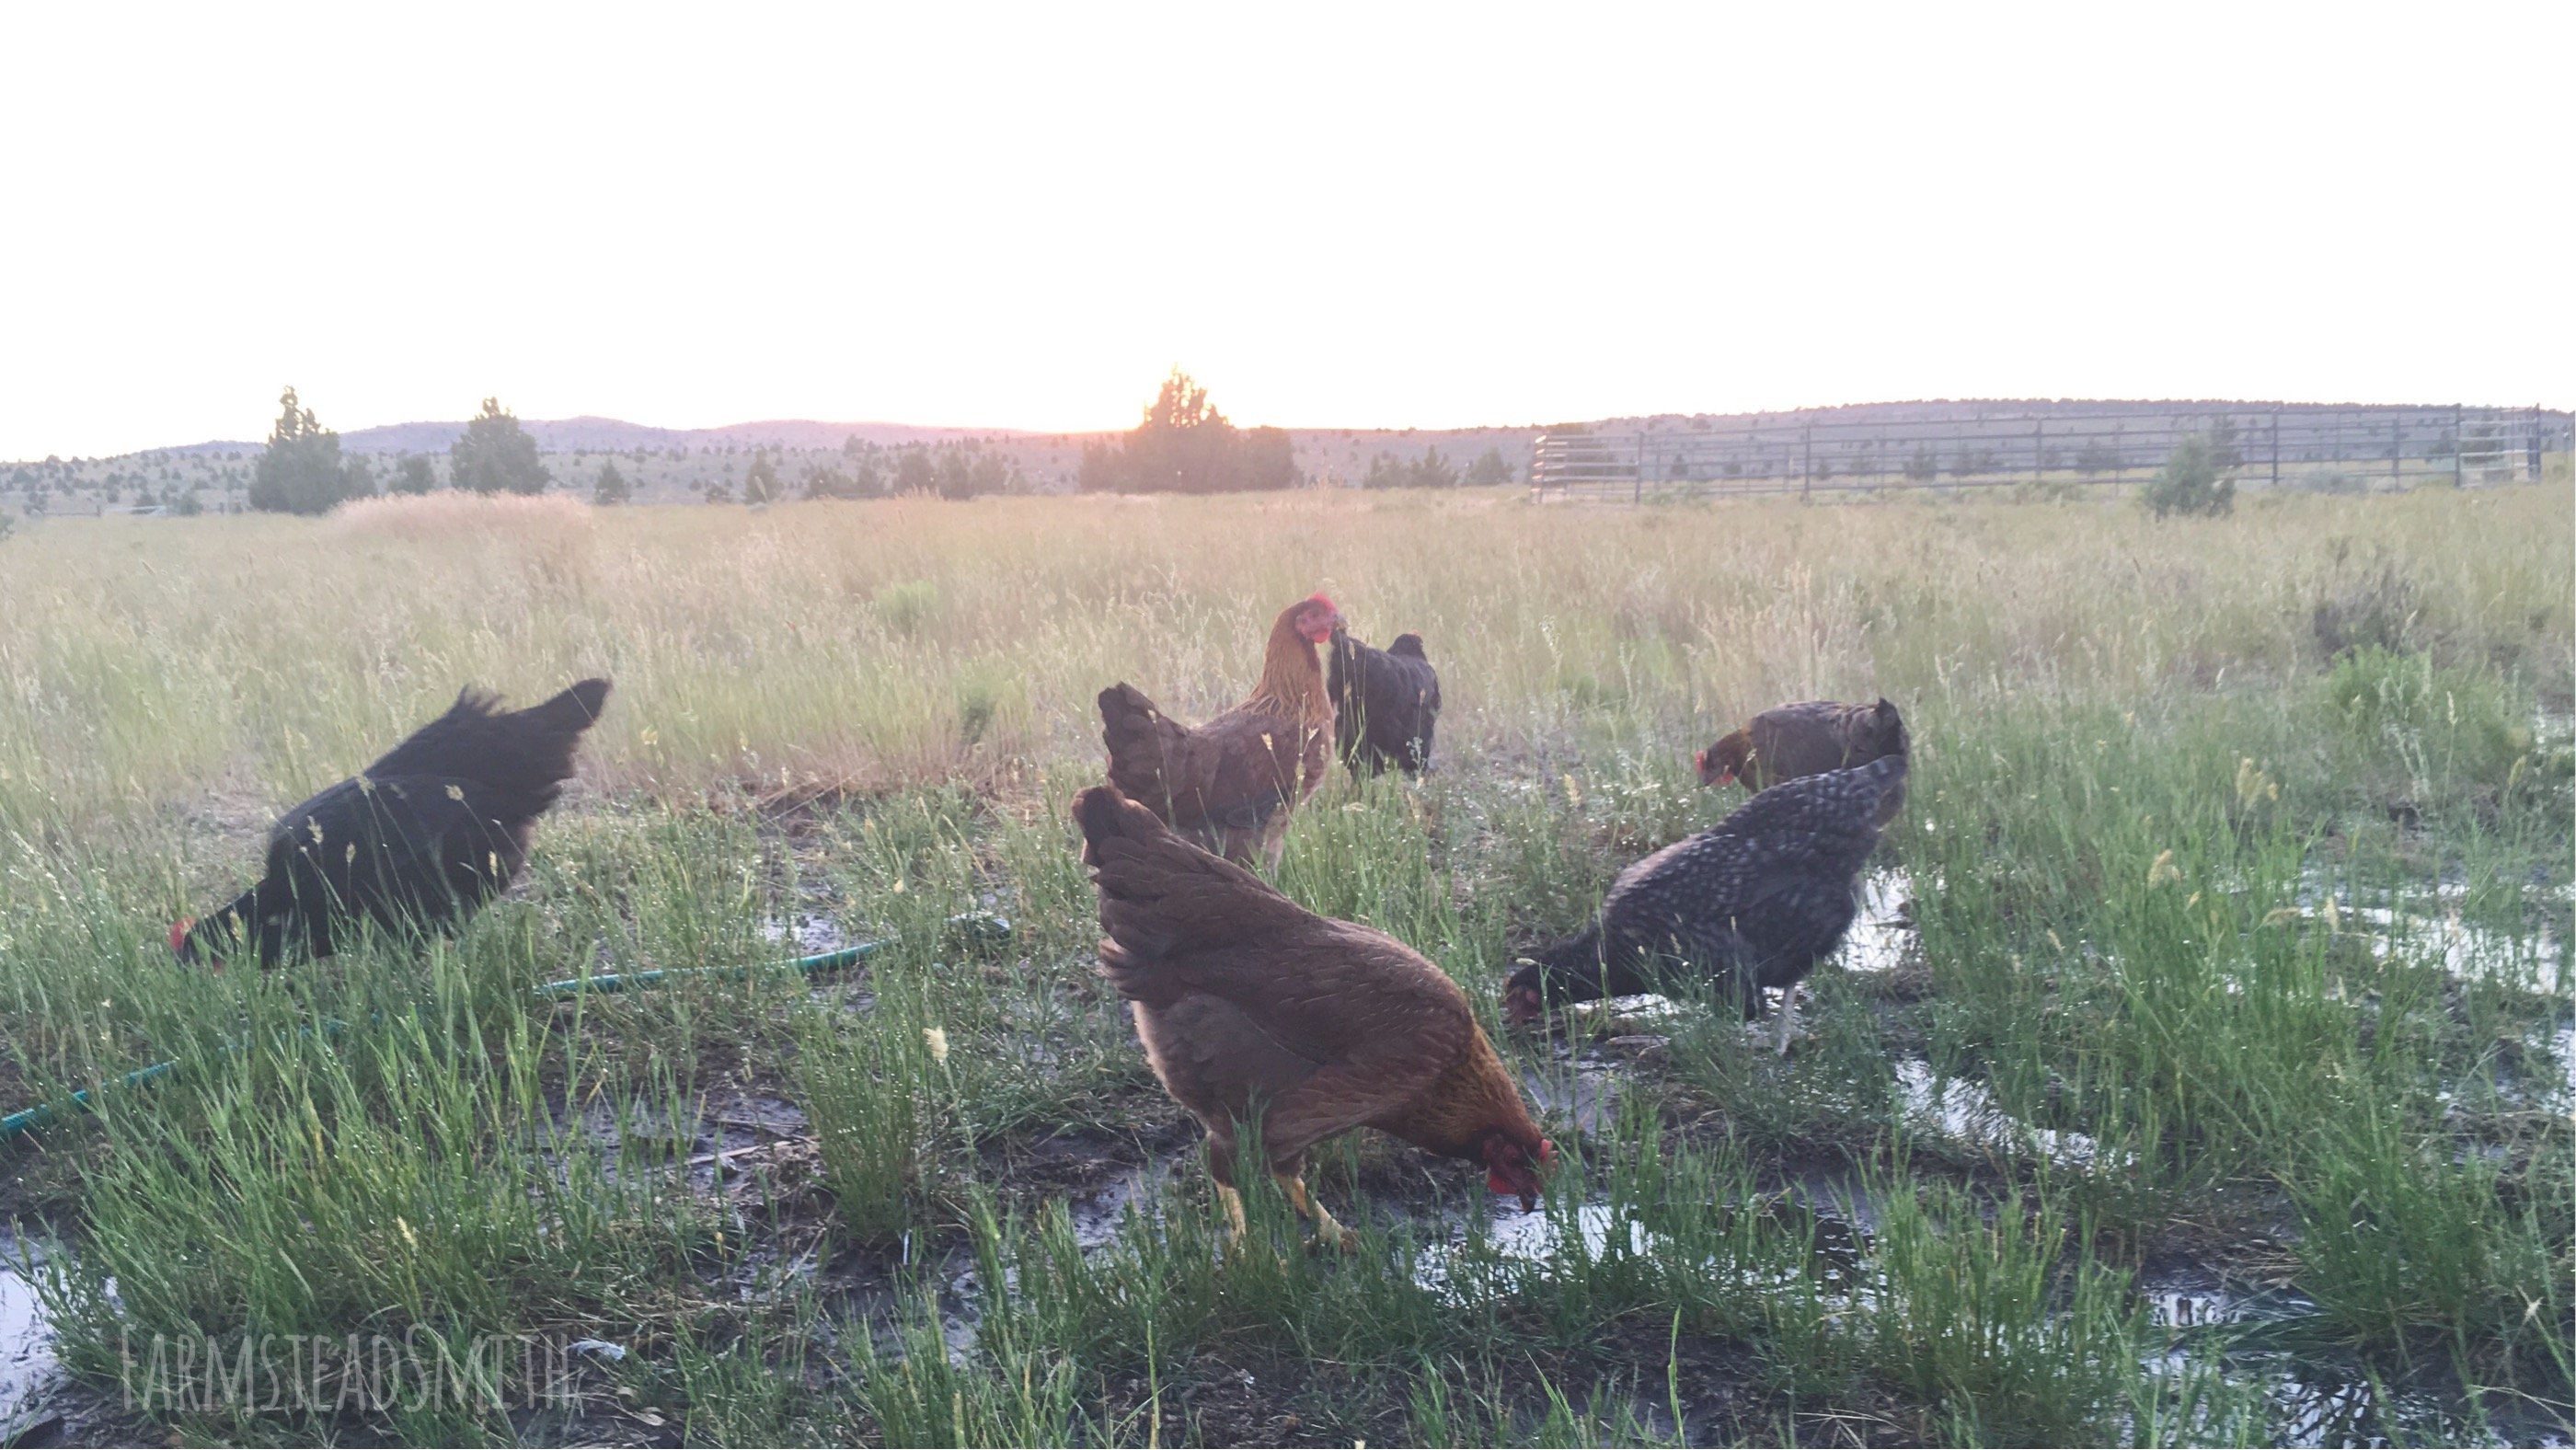 chickens in my field